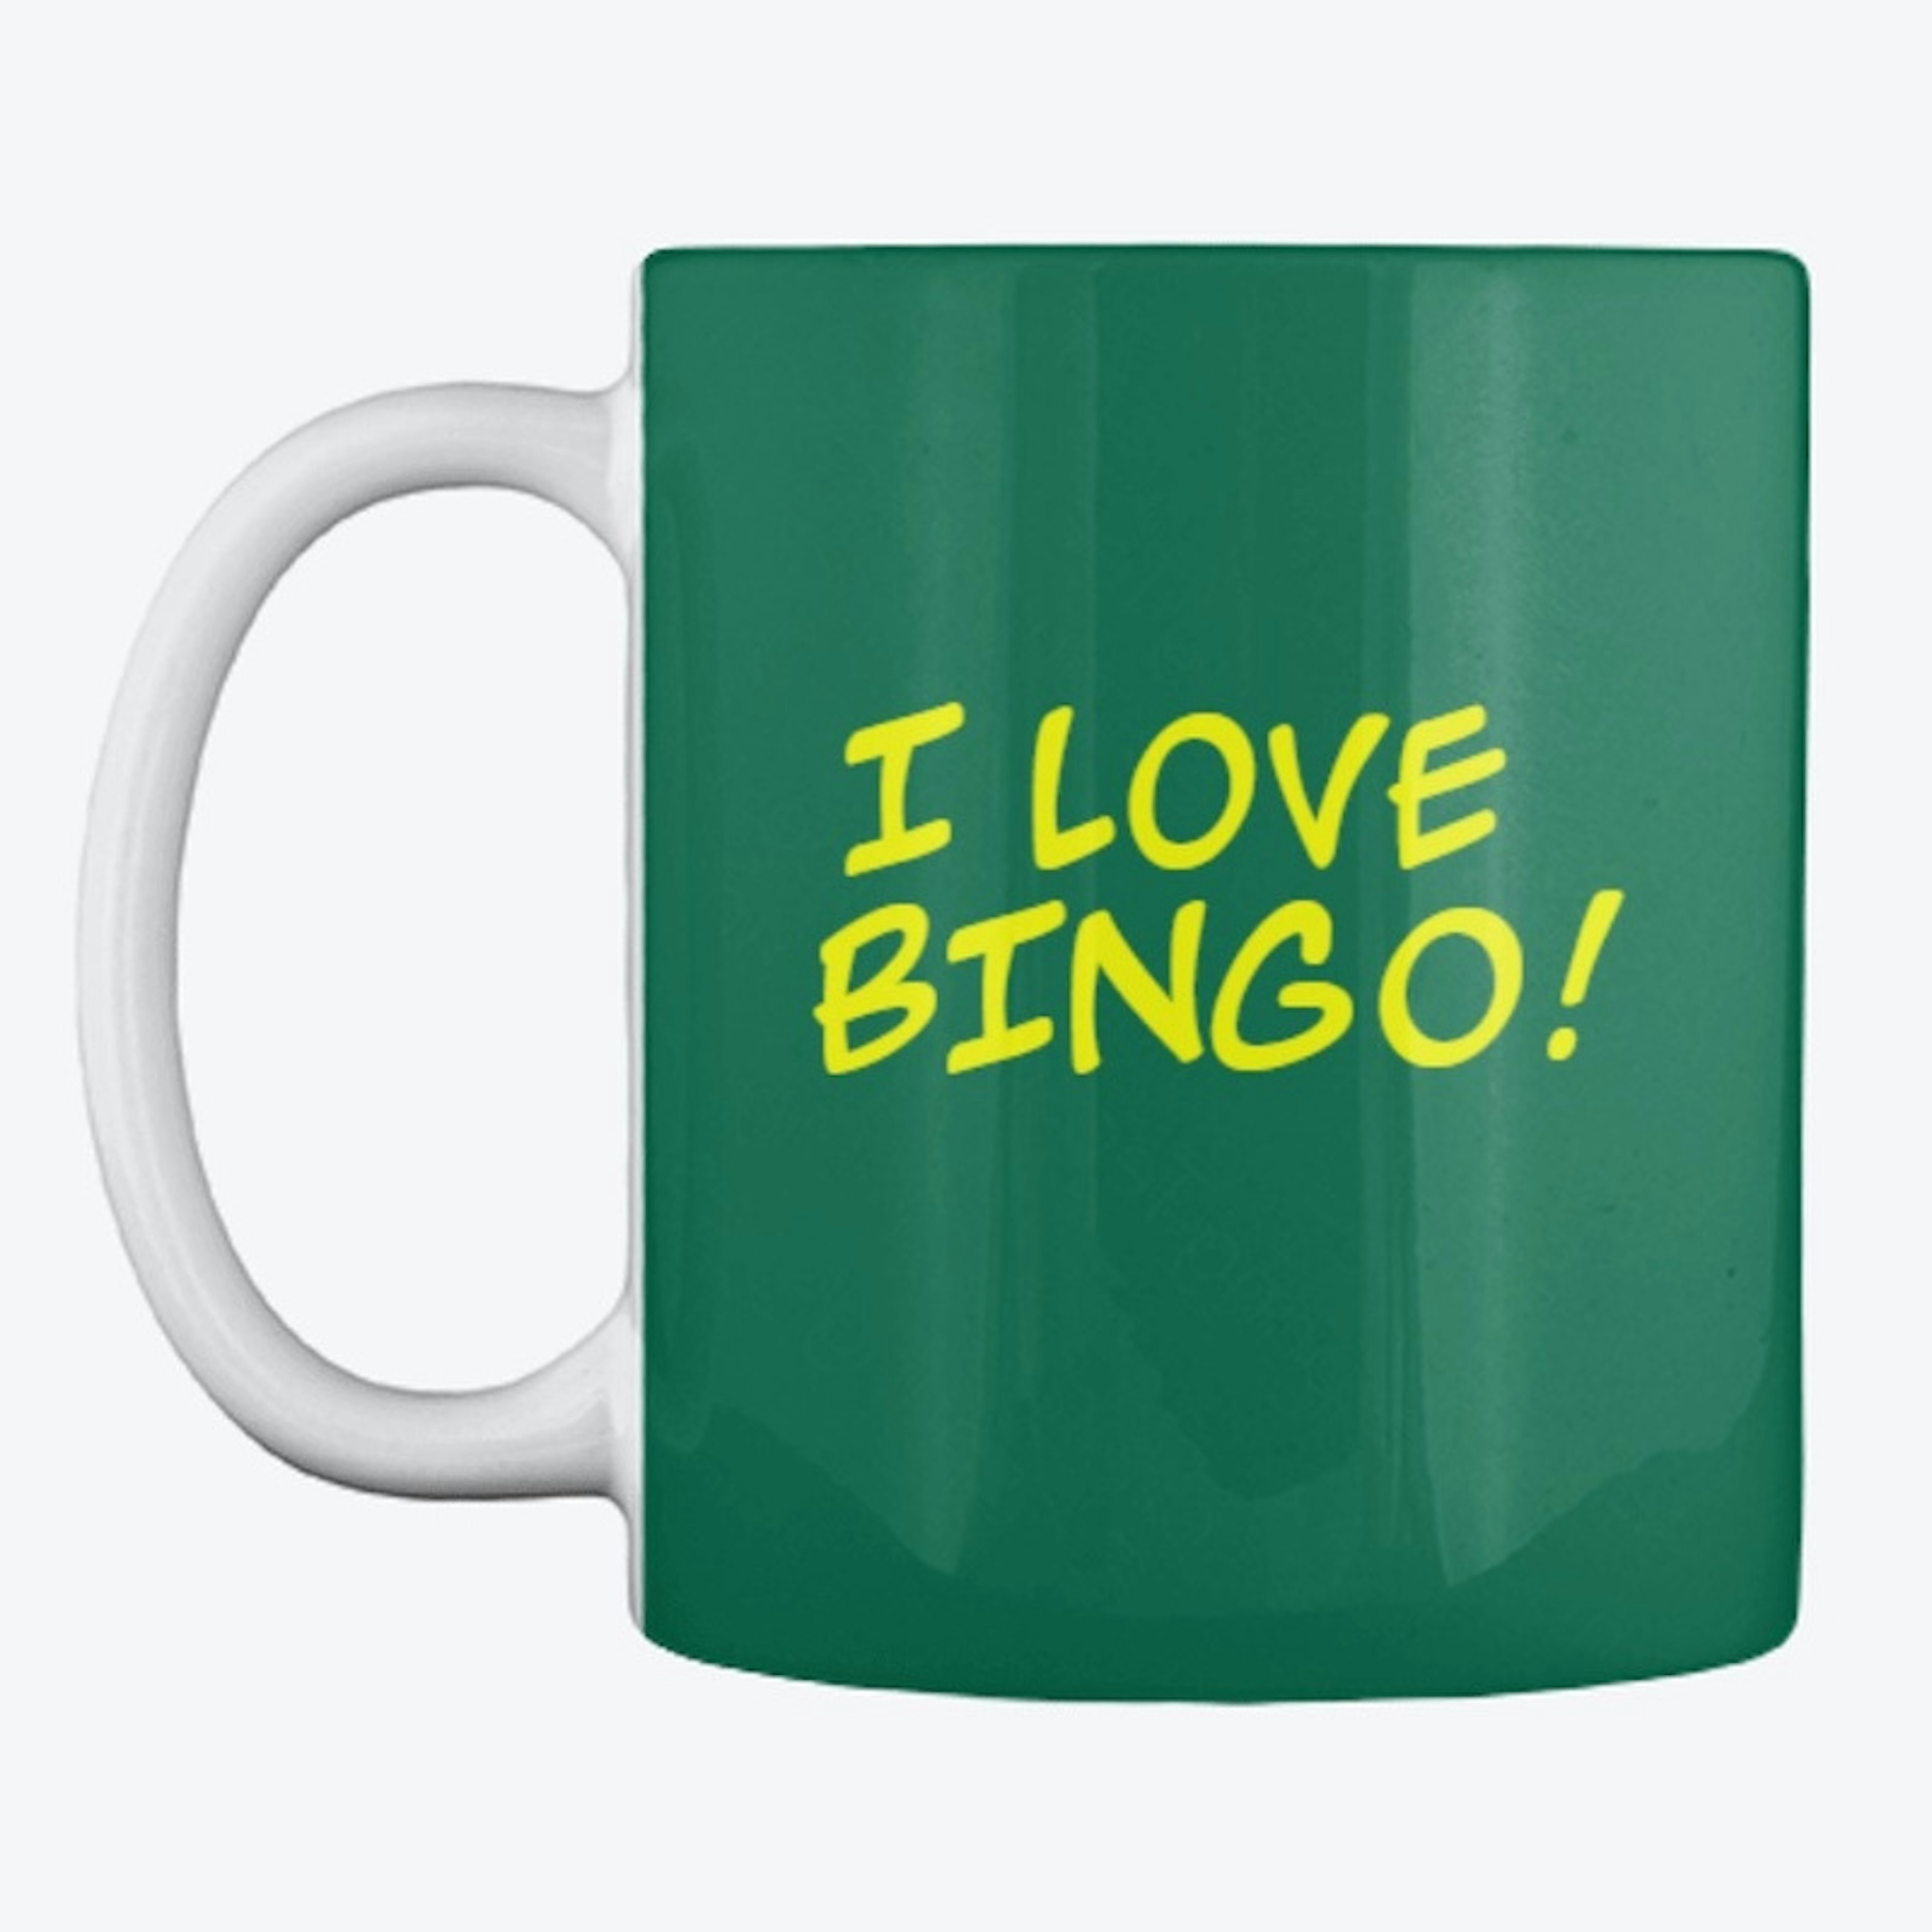 I  LOVE BINGO!